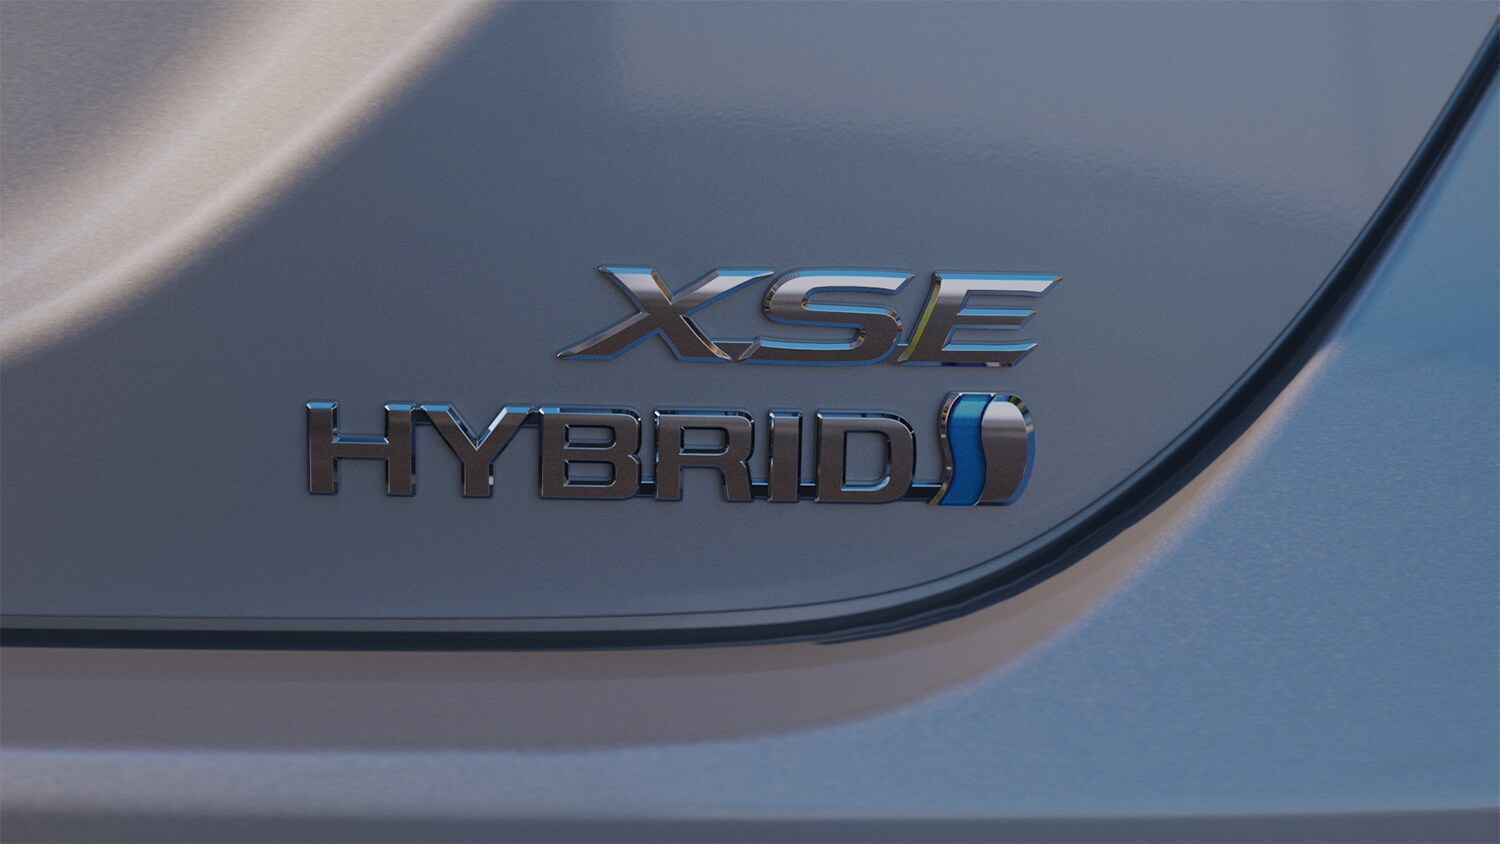 Toyota Hybrid for Everyone at Bobby Rahal Toyota | 2022 Toyota Camry Hybrid rear badge